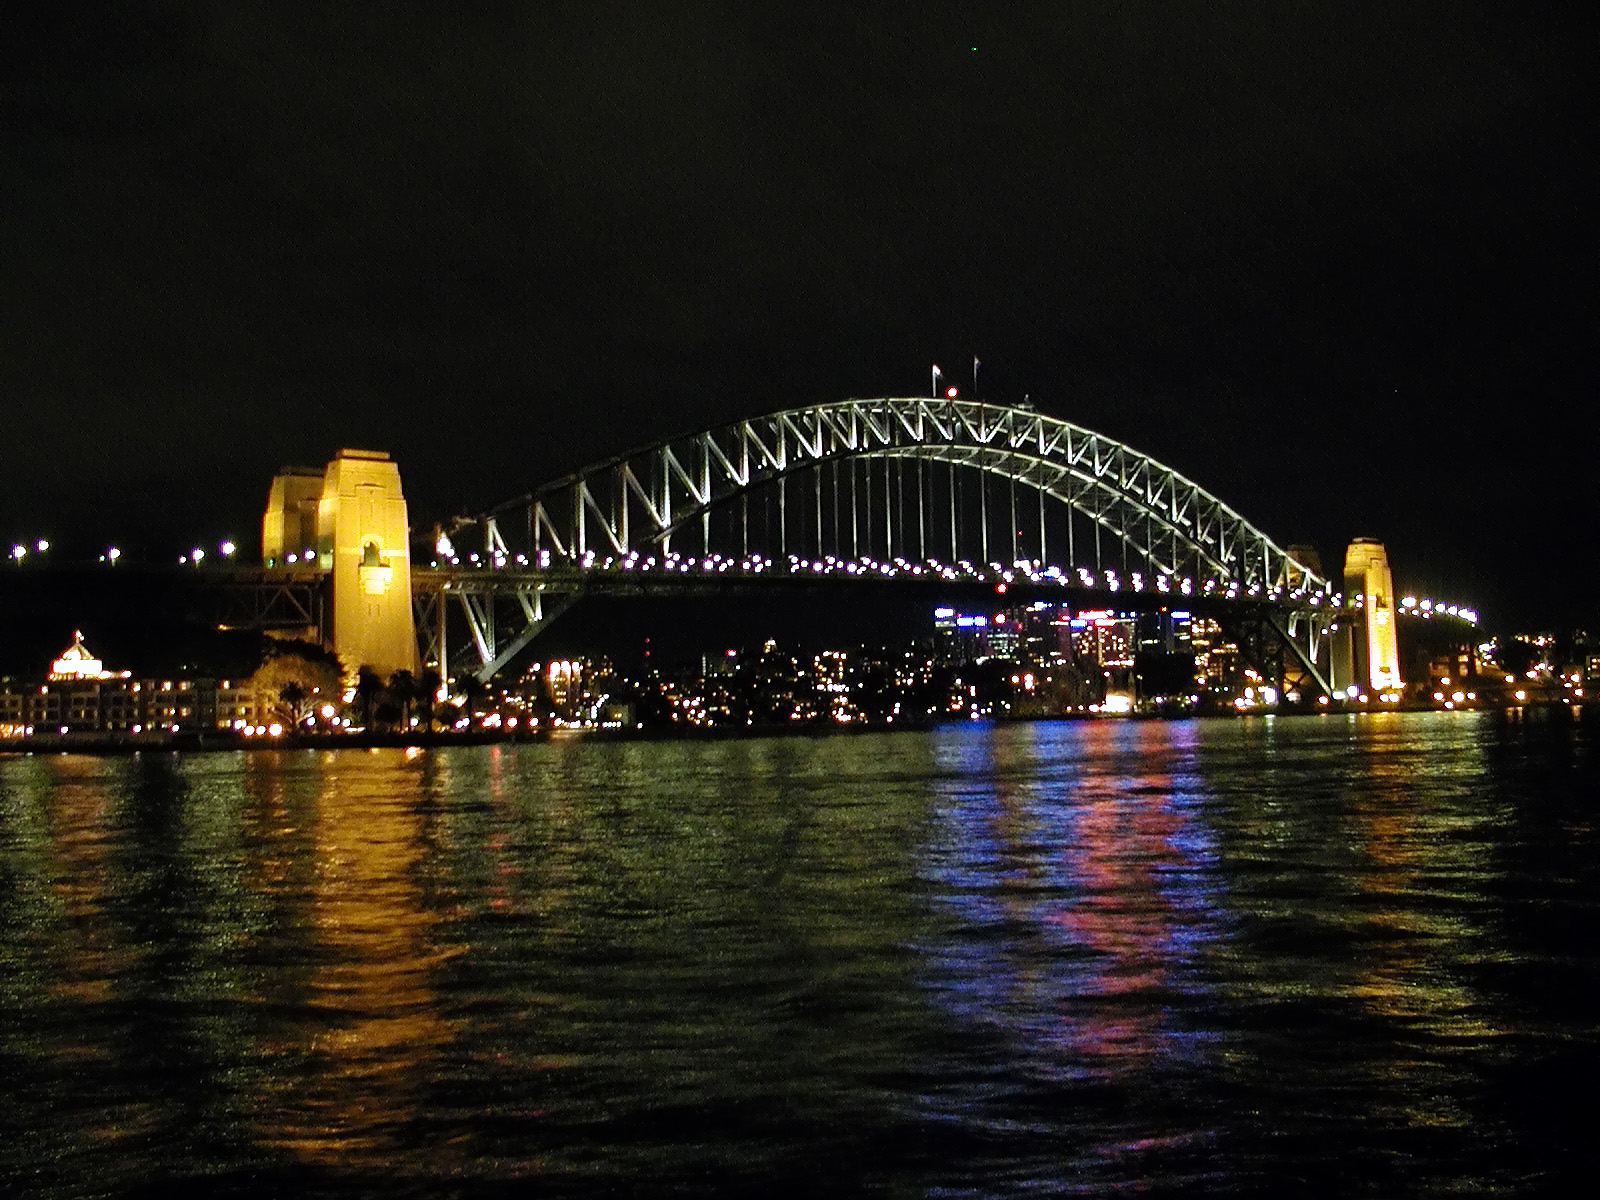 16-Jun-2001 21:05 - Sydney - Sydney Harbour bridge